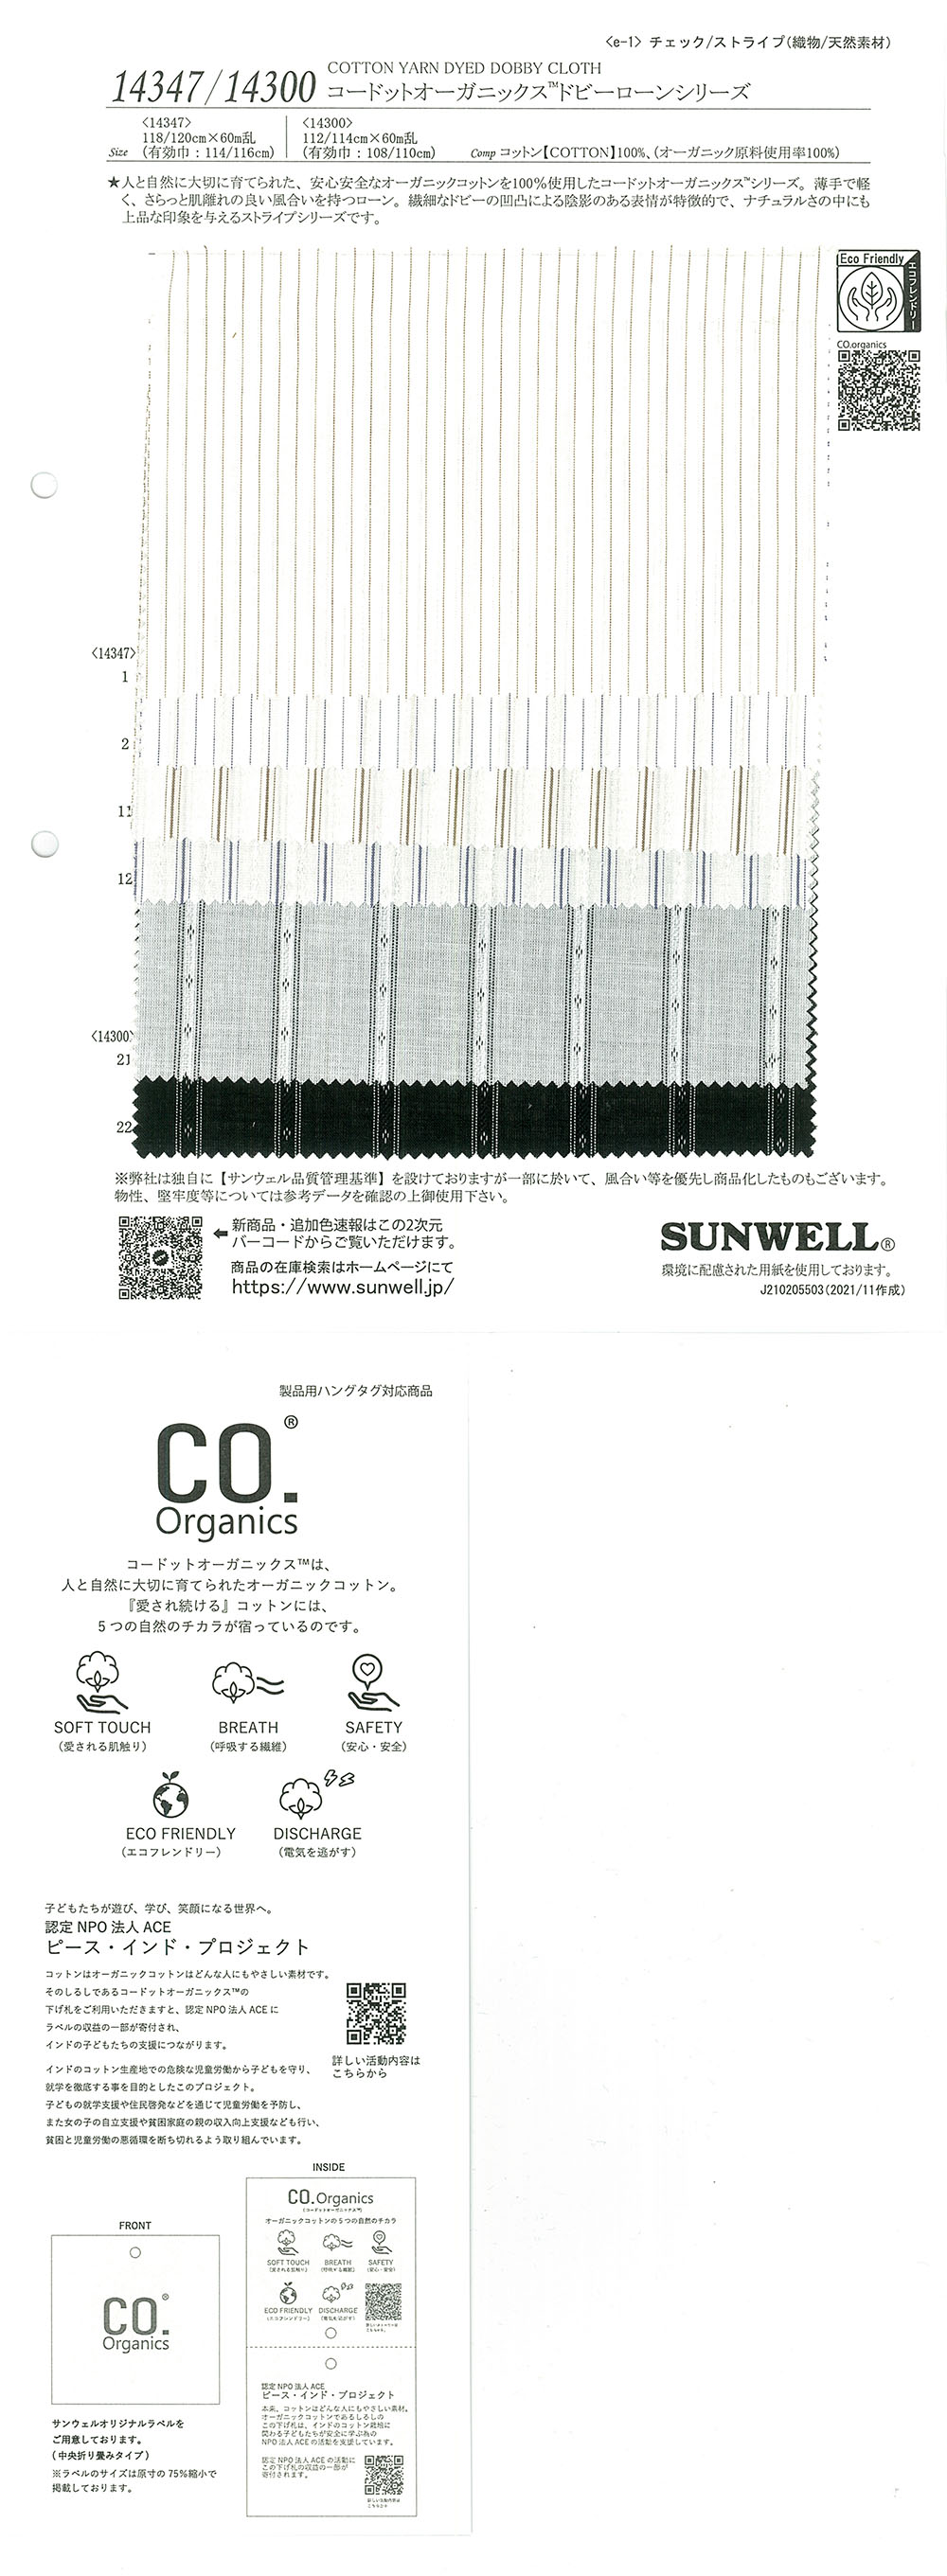 14300 Cordot Organics (R) Dobby Lawn-Serie[Textilgewebe] SUNWELL